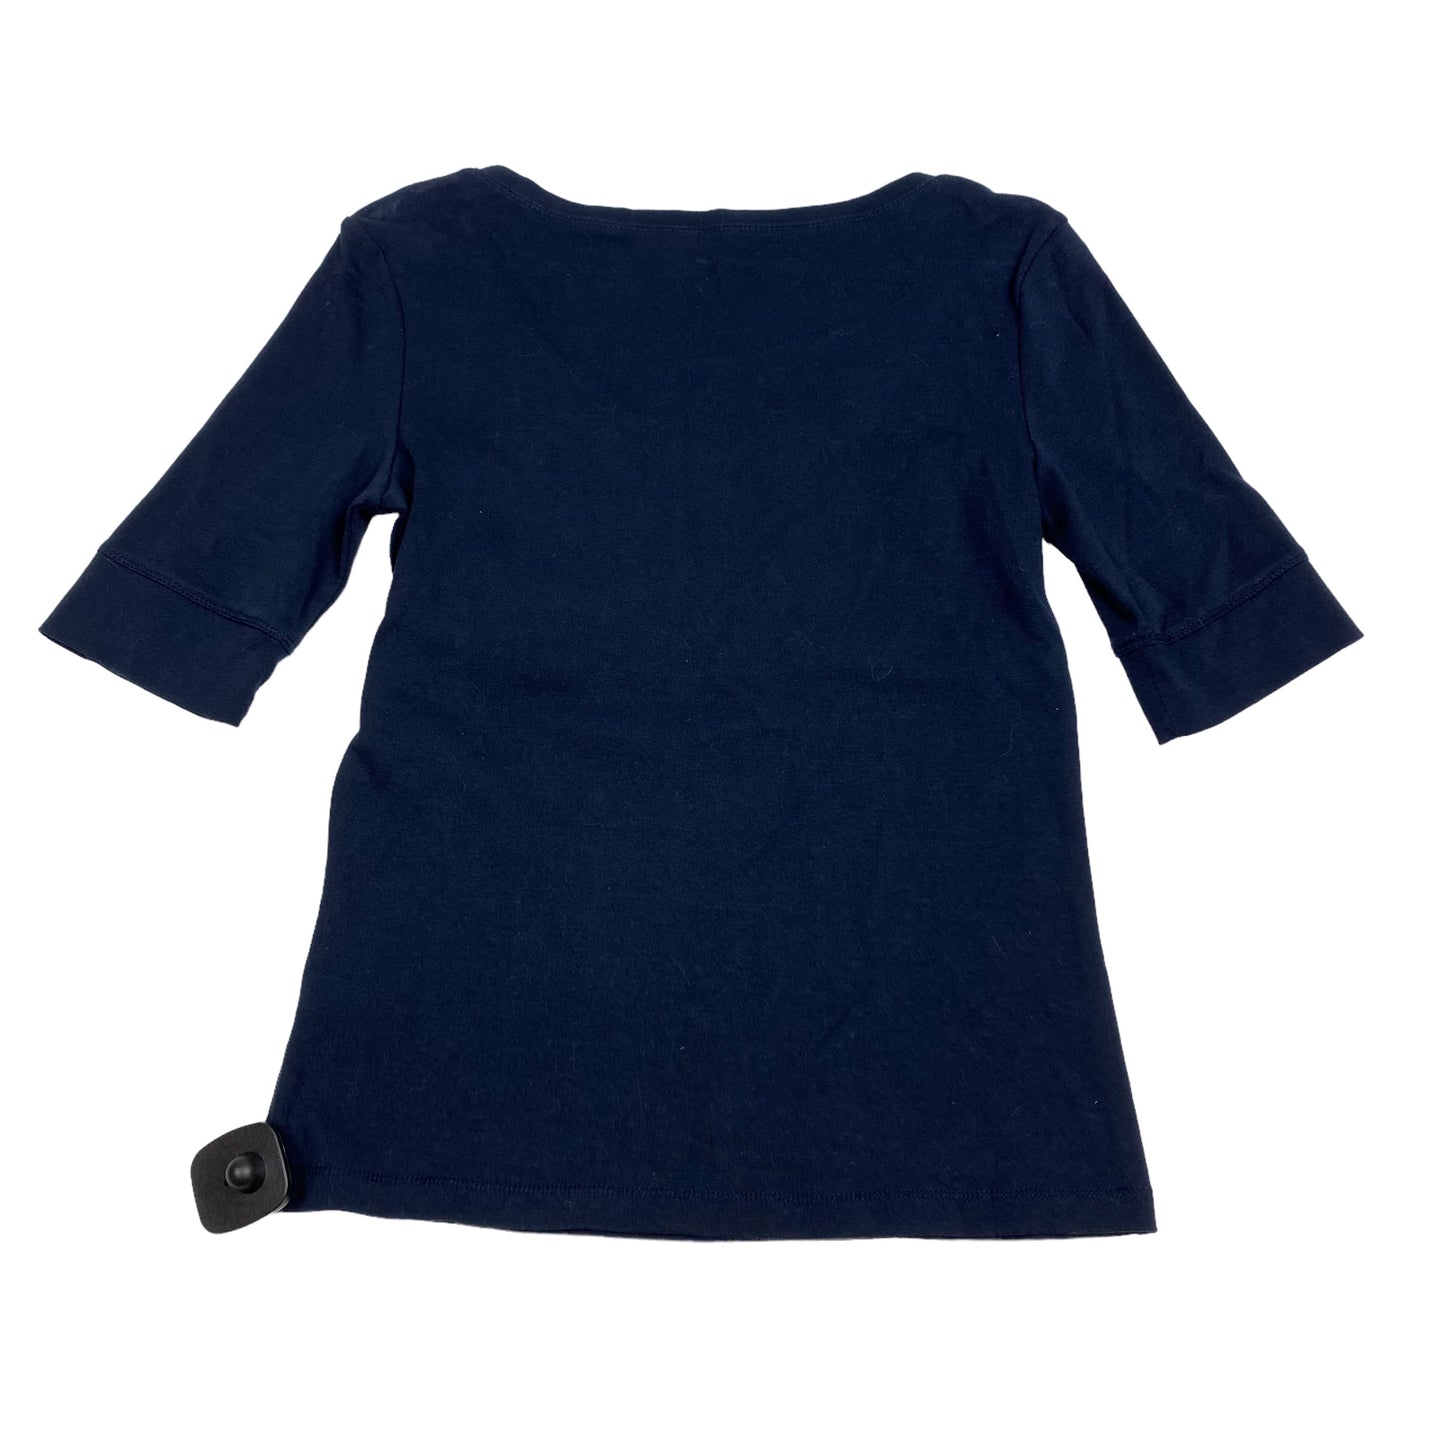 Top Short Sleeve Basic By Jones New York  Size: S